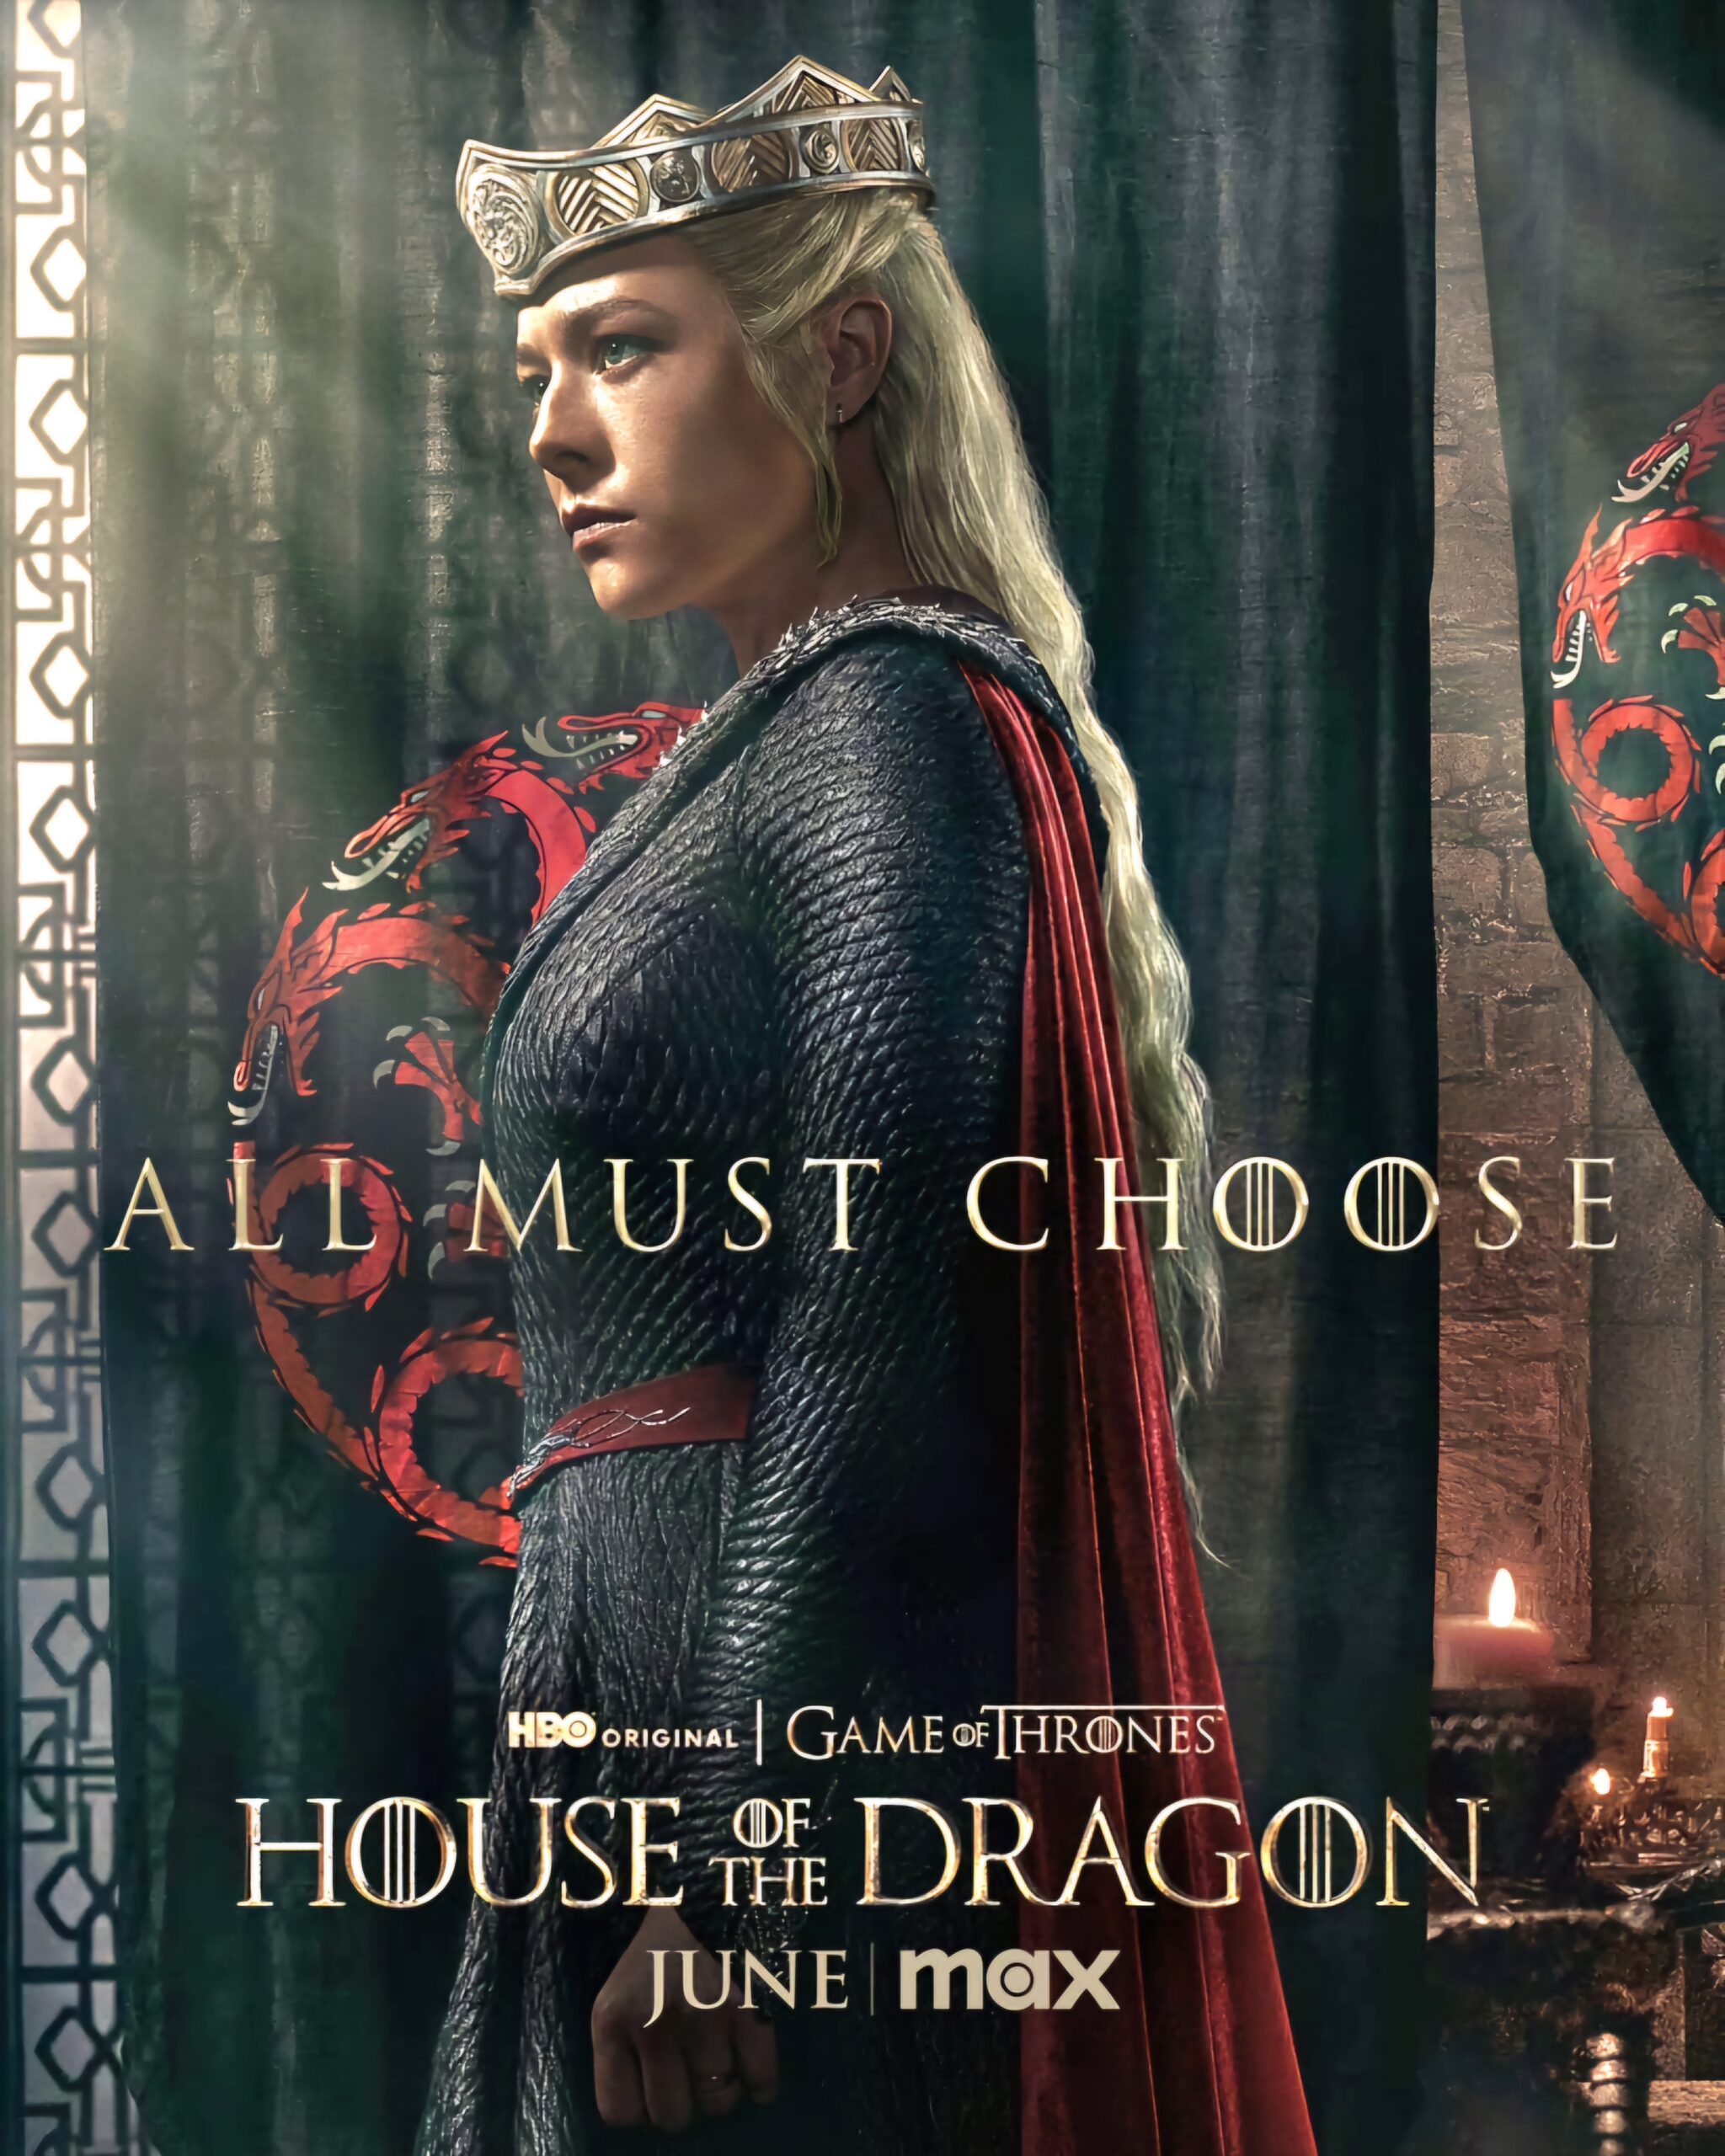 The house of dragons season 2 